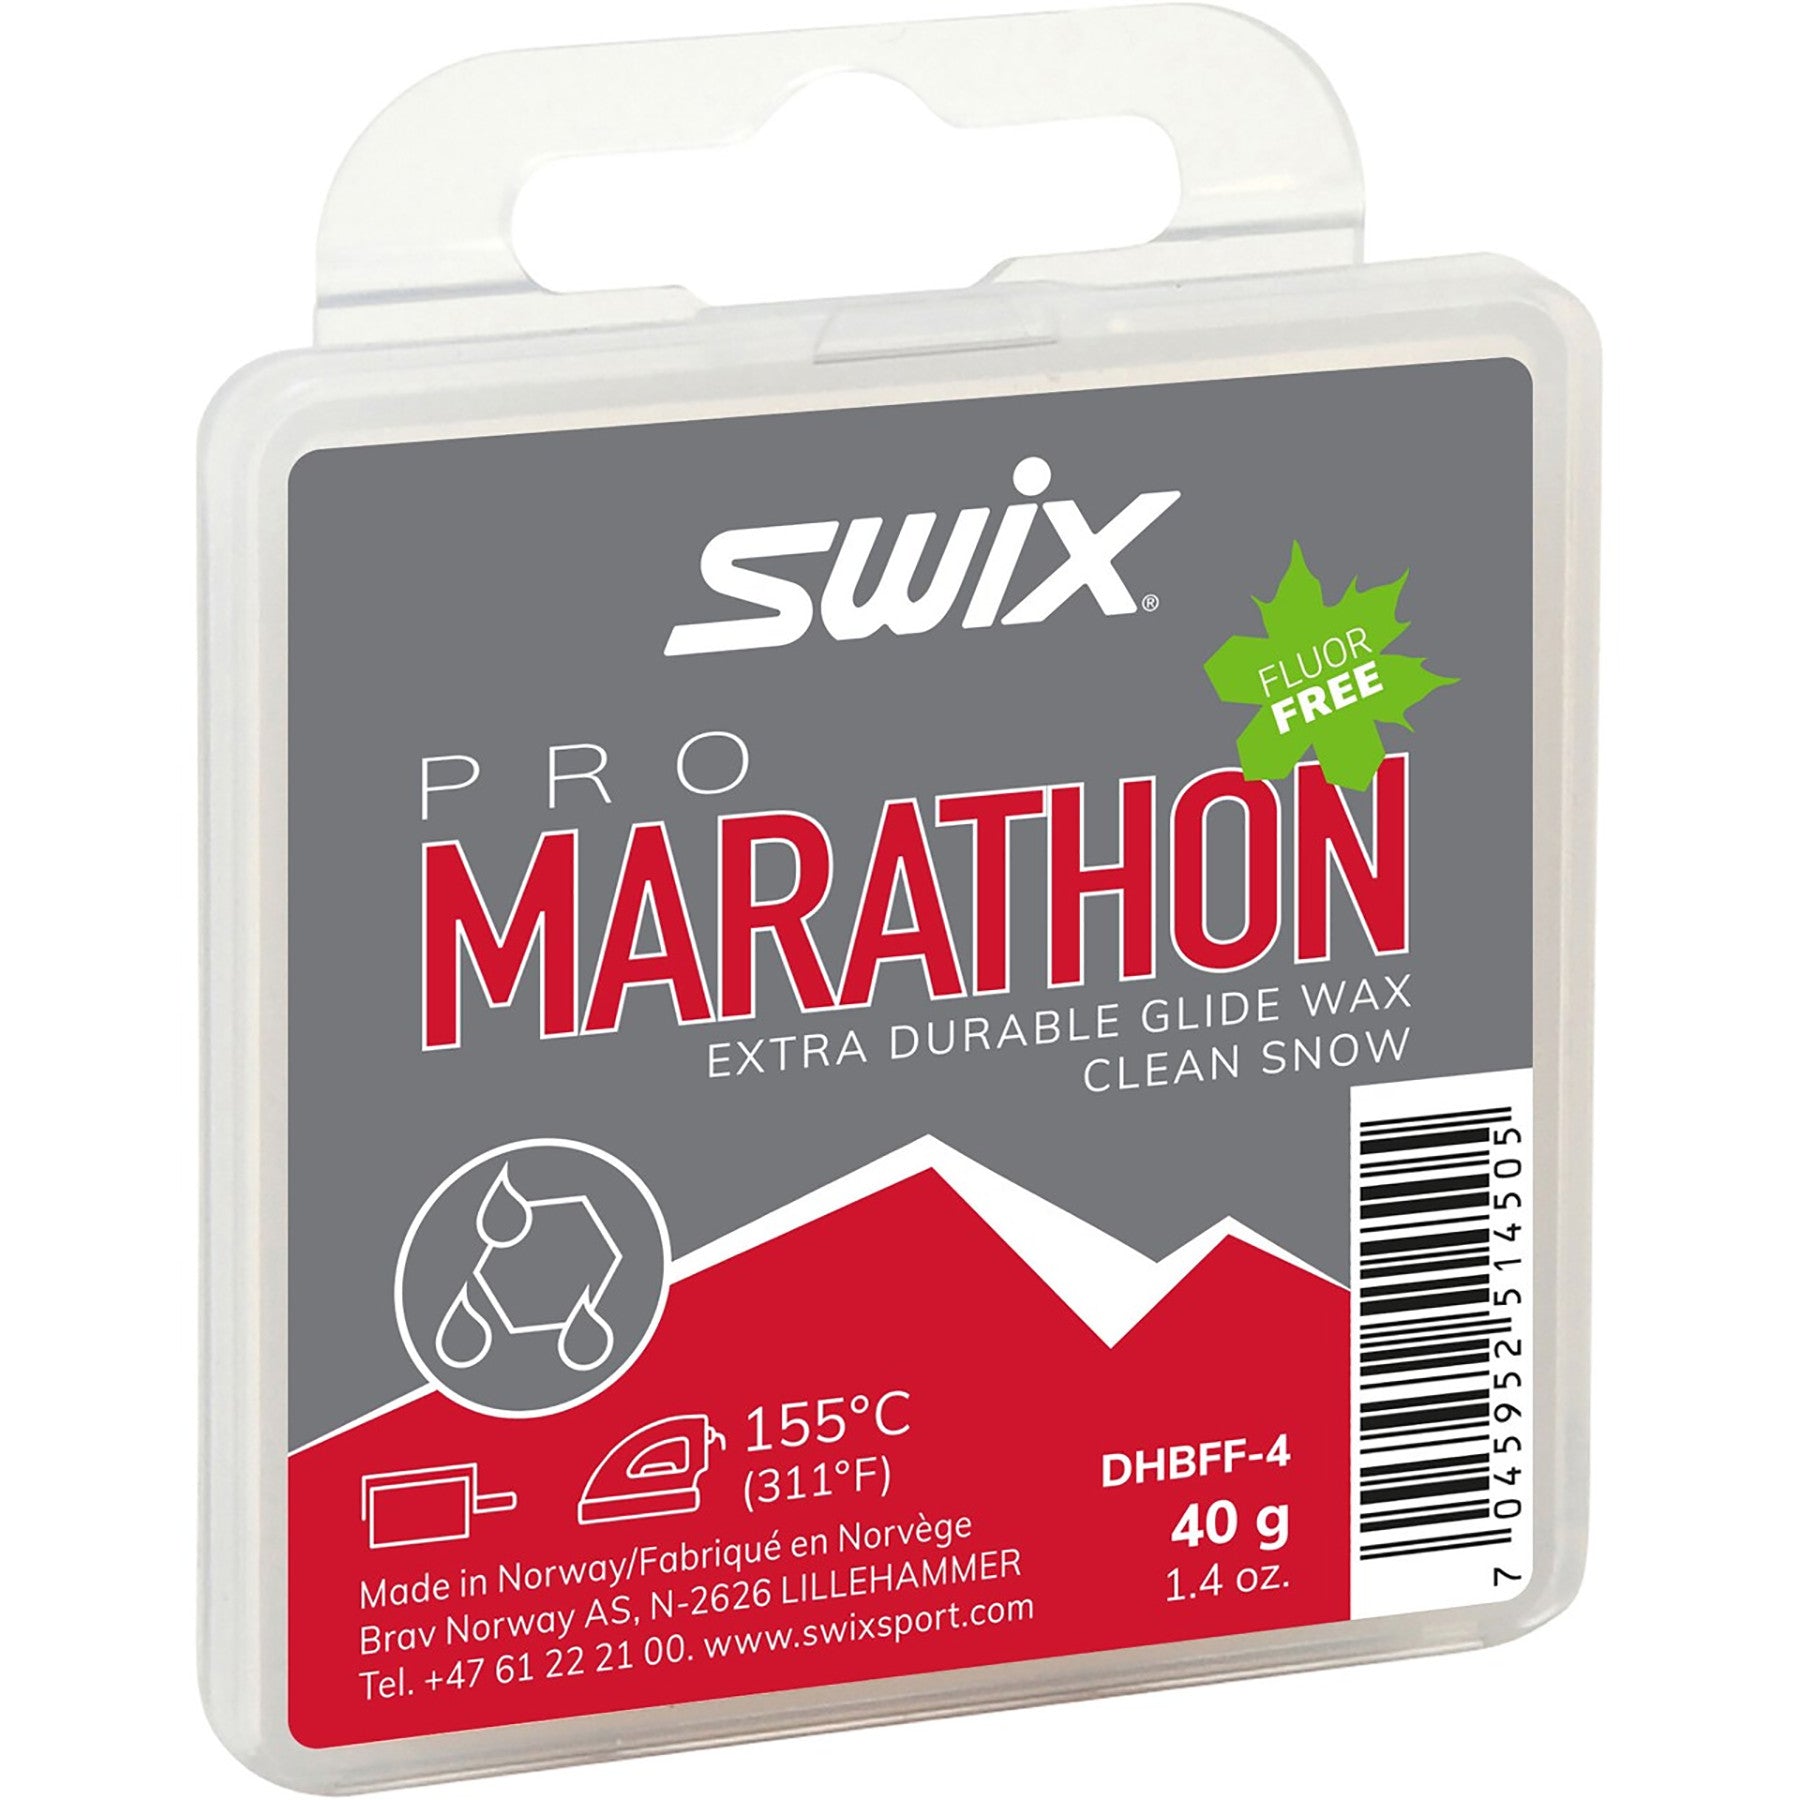 Swix Marathon Fluoro Free 40g | Boulder Nordic & Cycle Sport